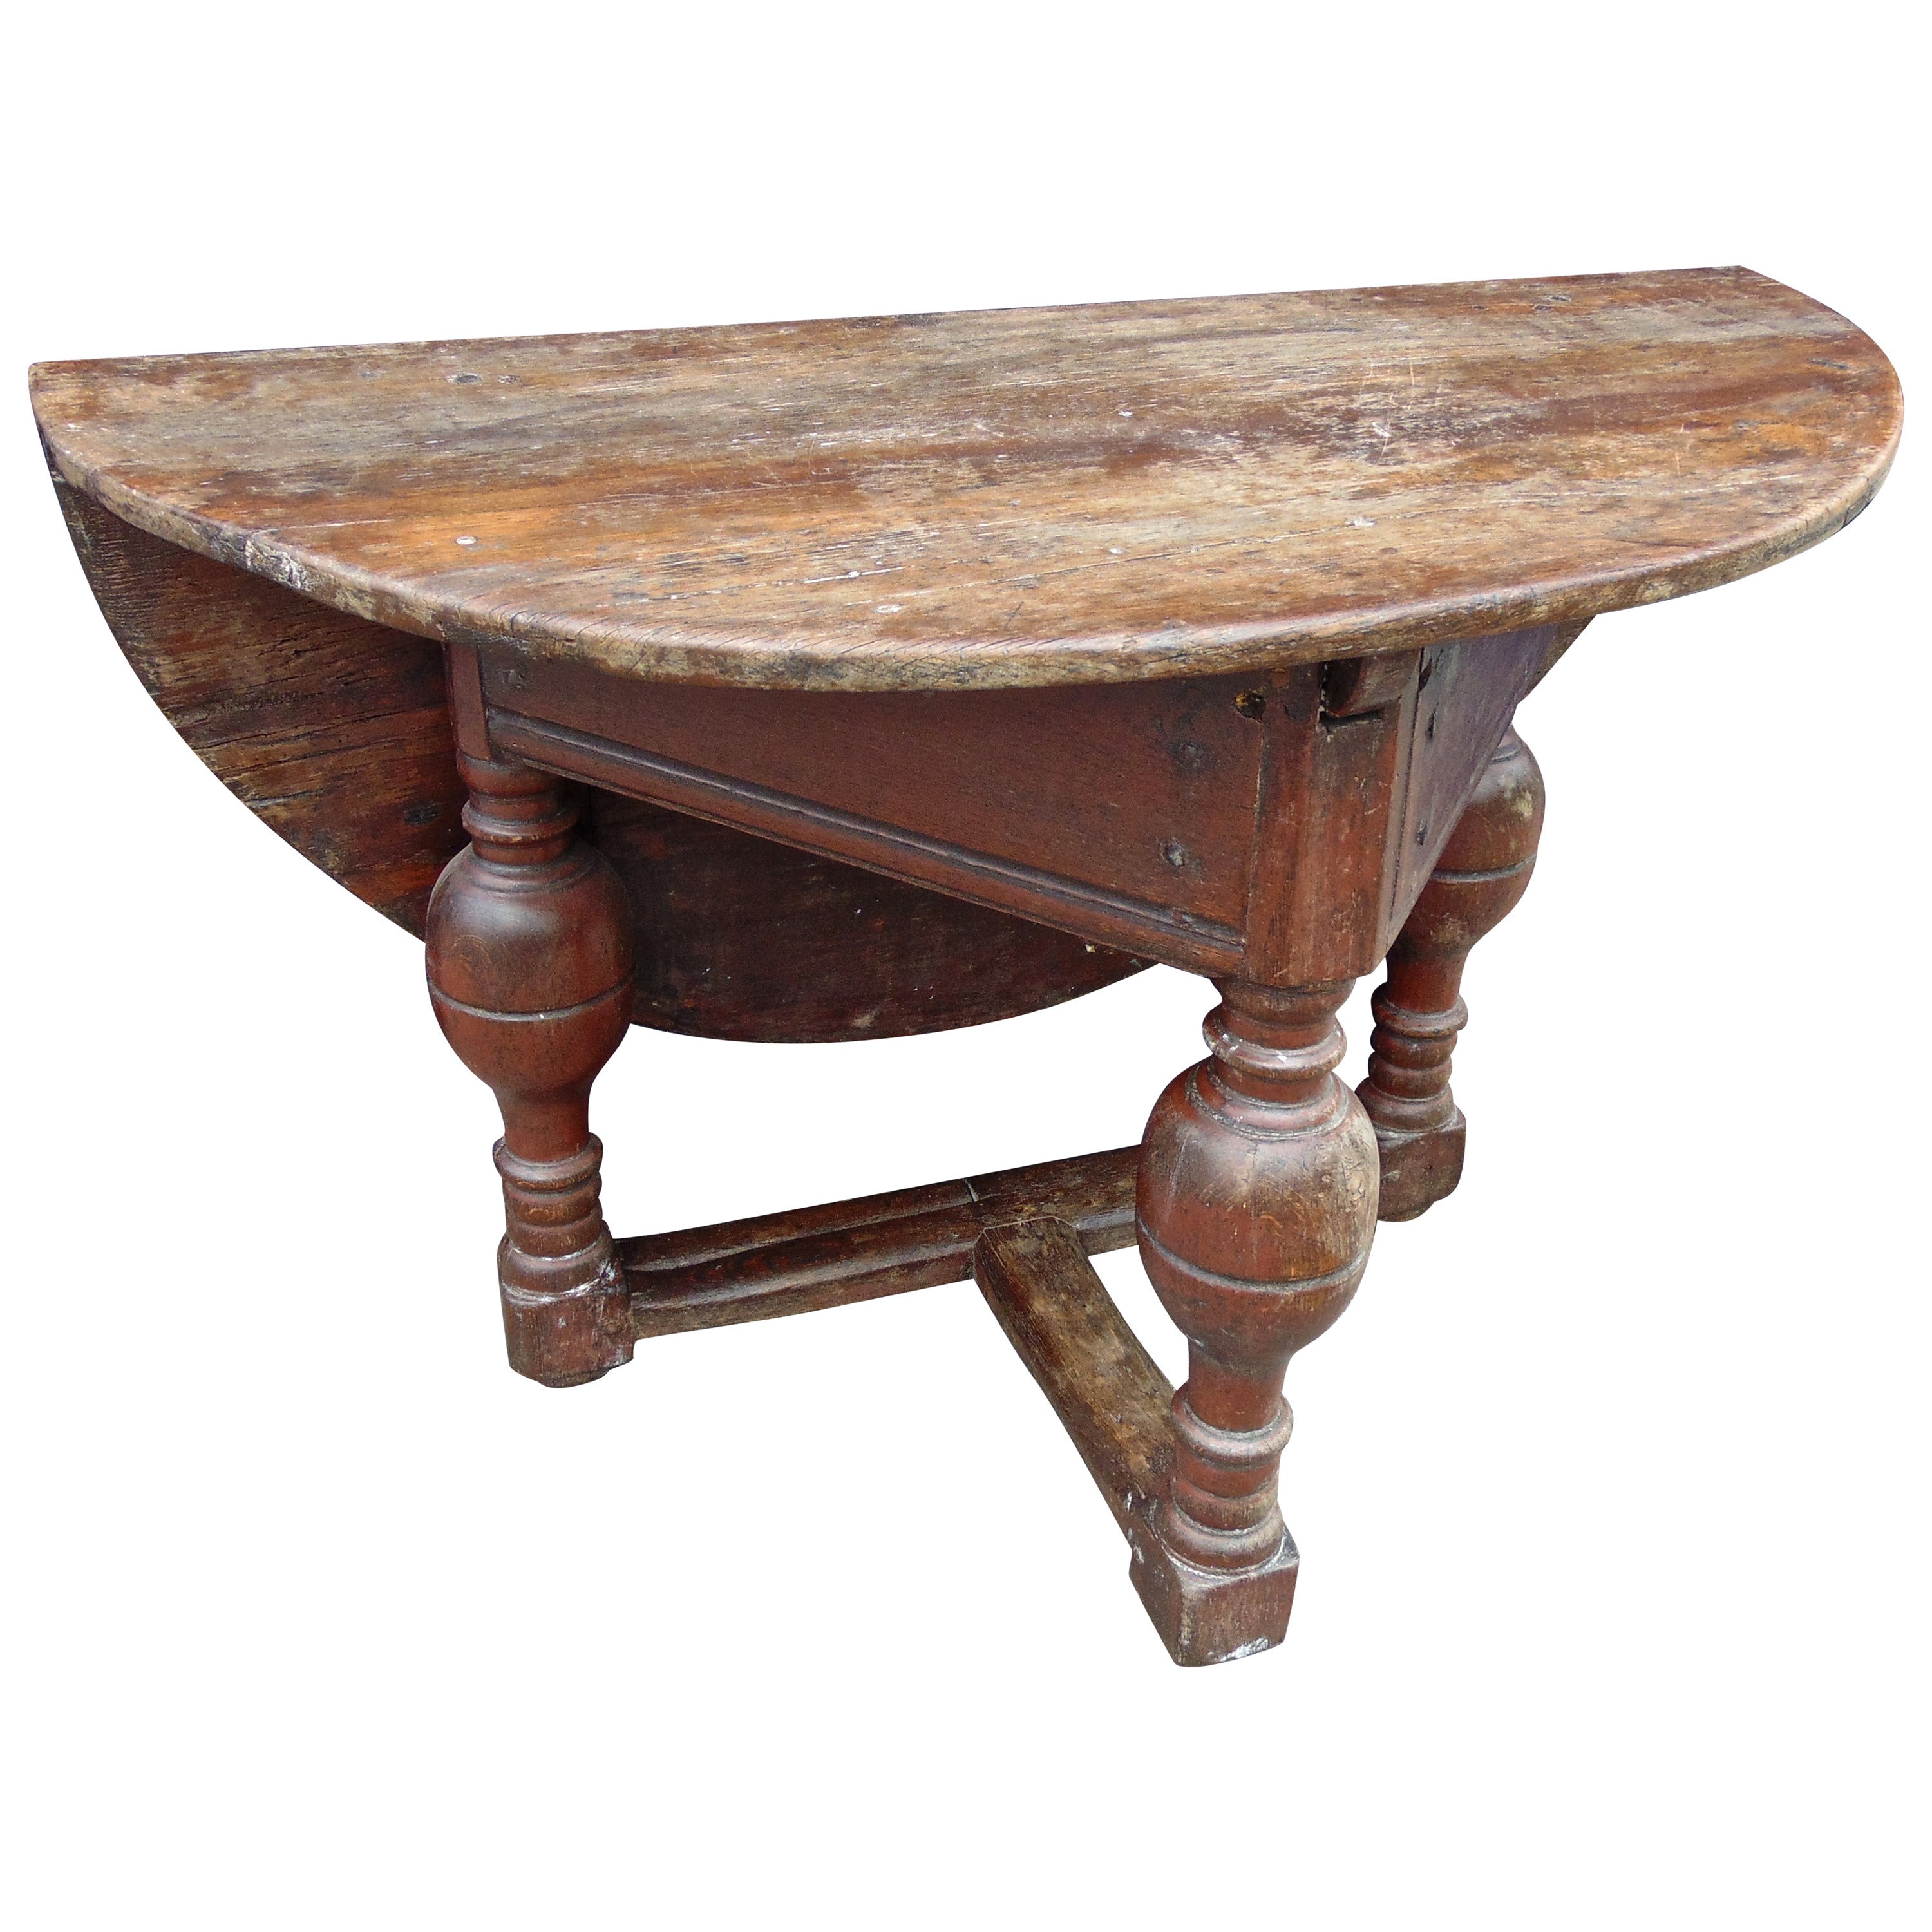 Period 17th Century Dutch Oak Drop-leaf Table in Original Surface